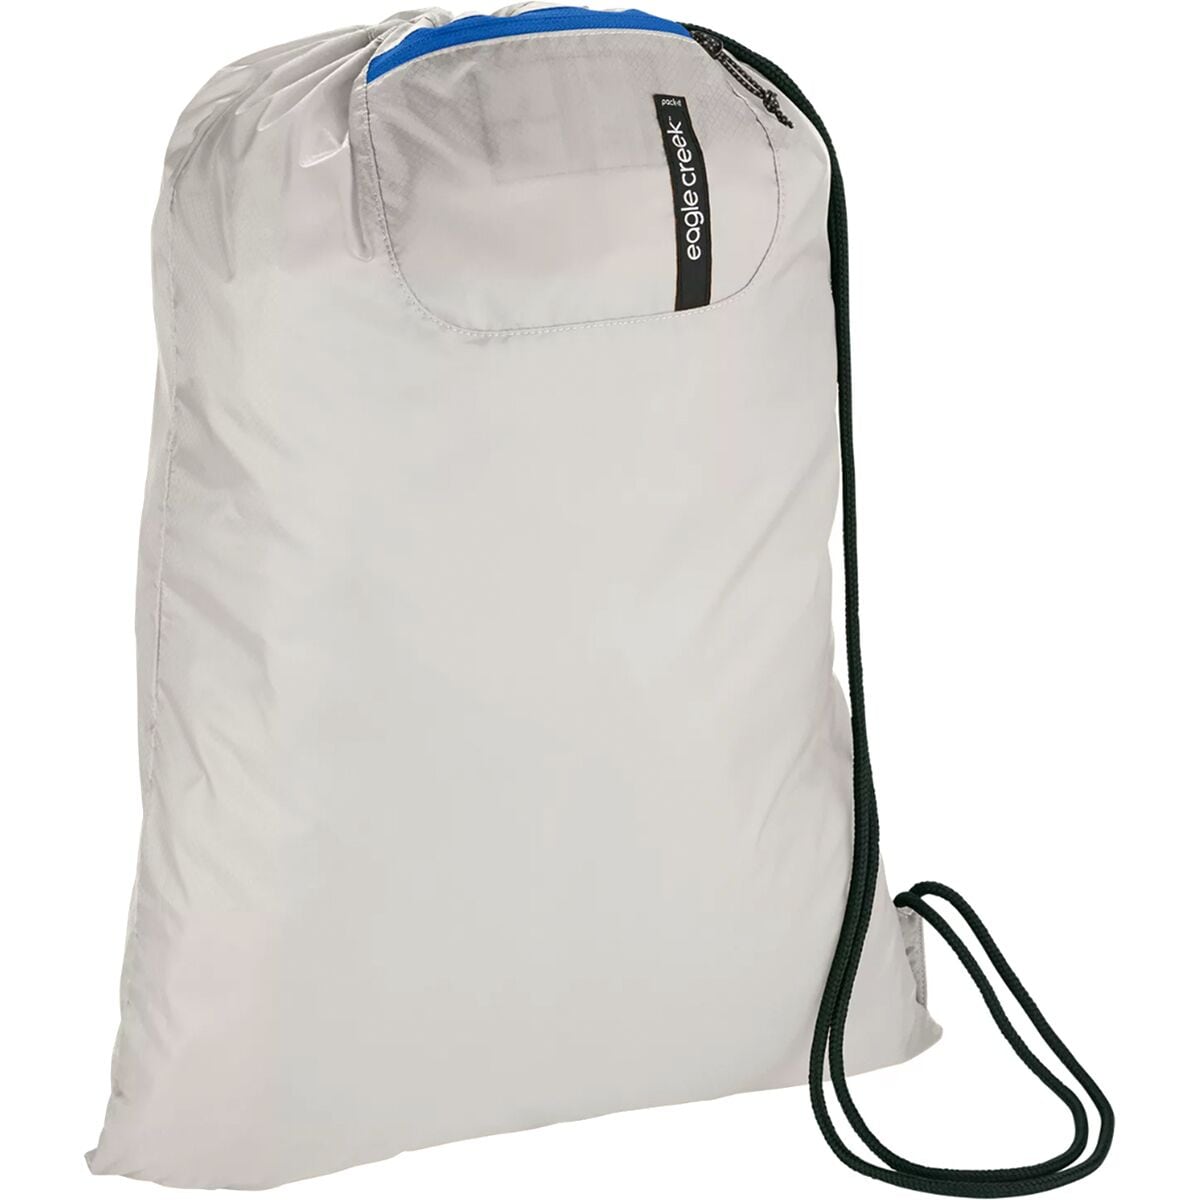 Eagle Creek Pack-It Isolate Laundry Sack - Travel